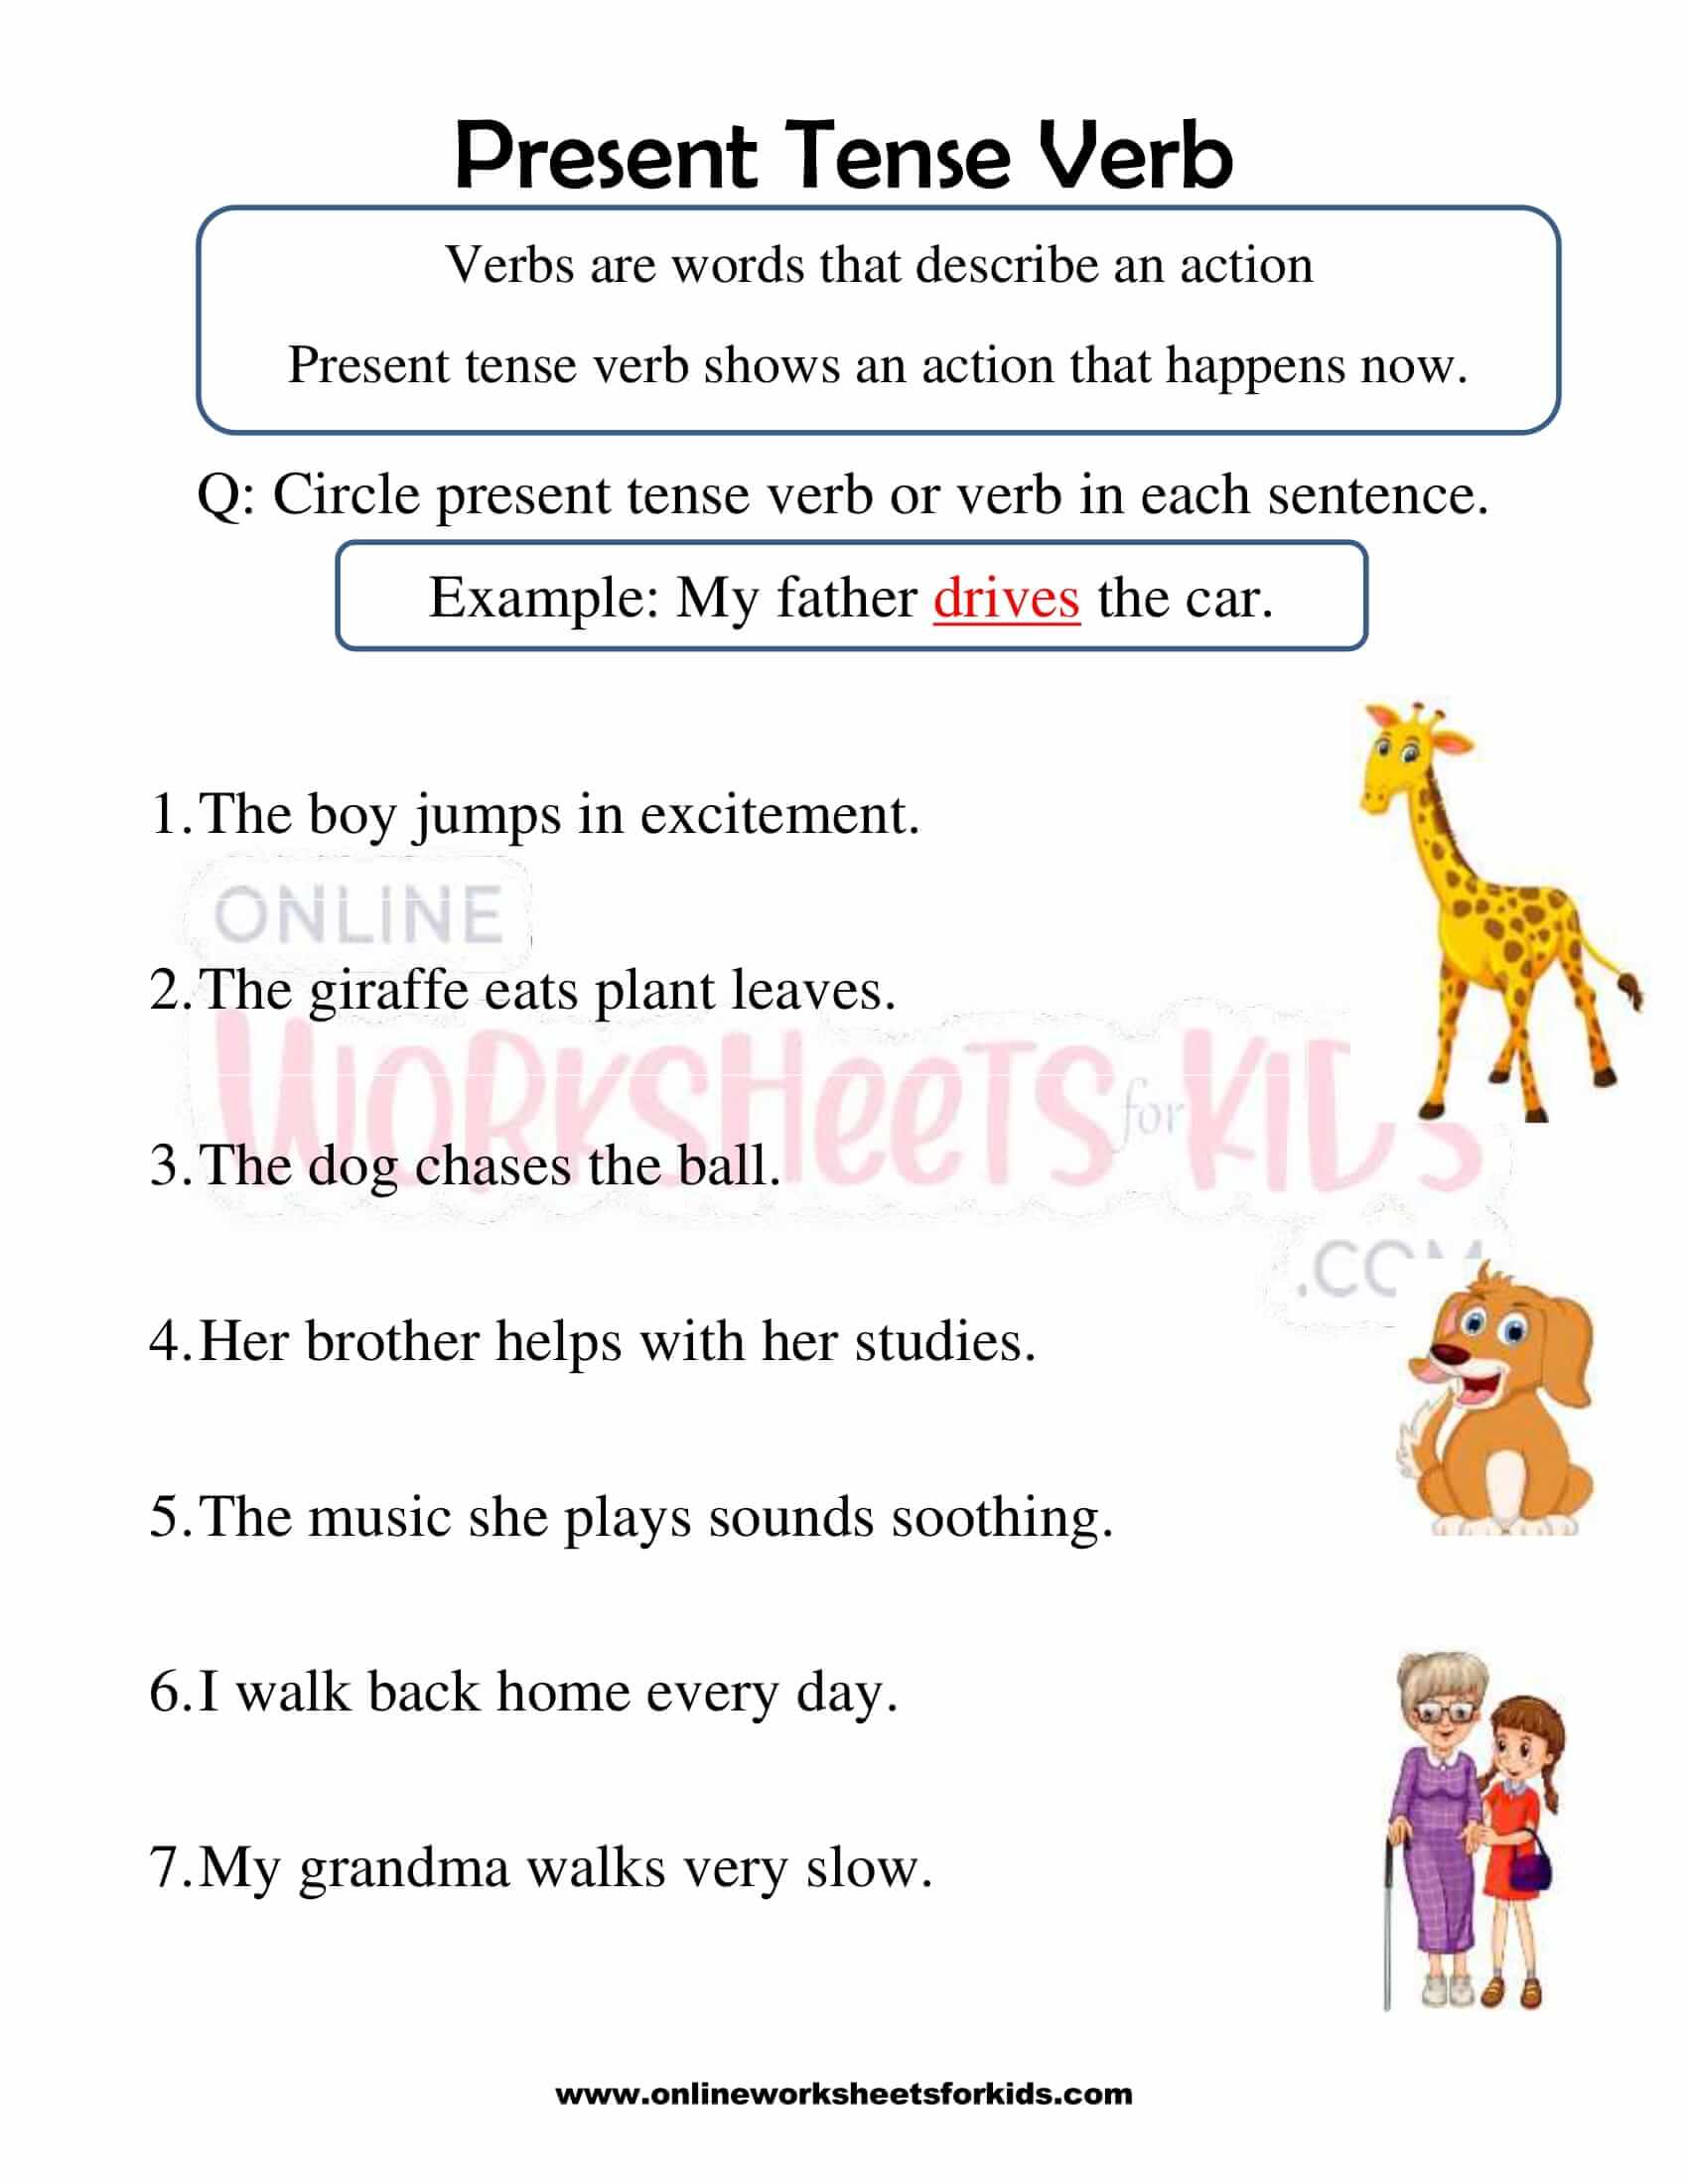 present-tense-verb-worksheet-1st-grade-10